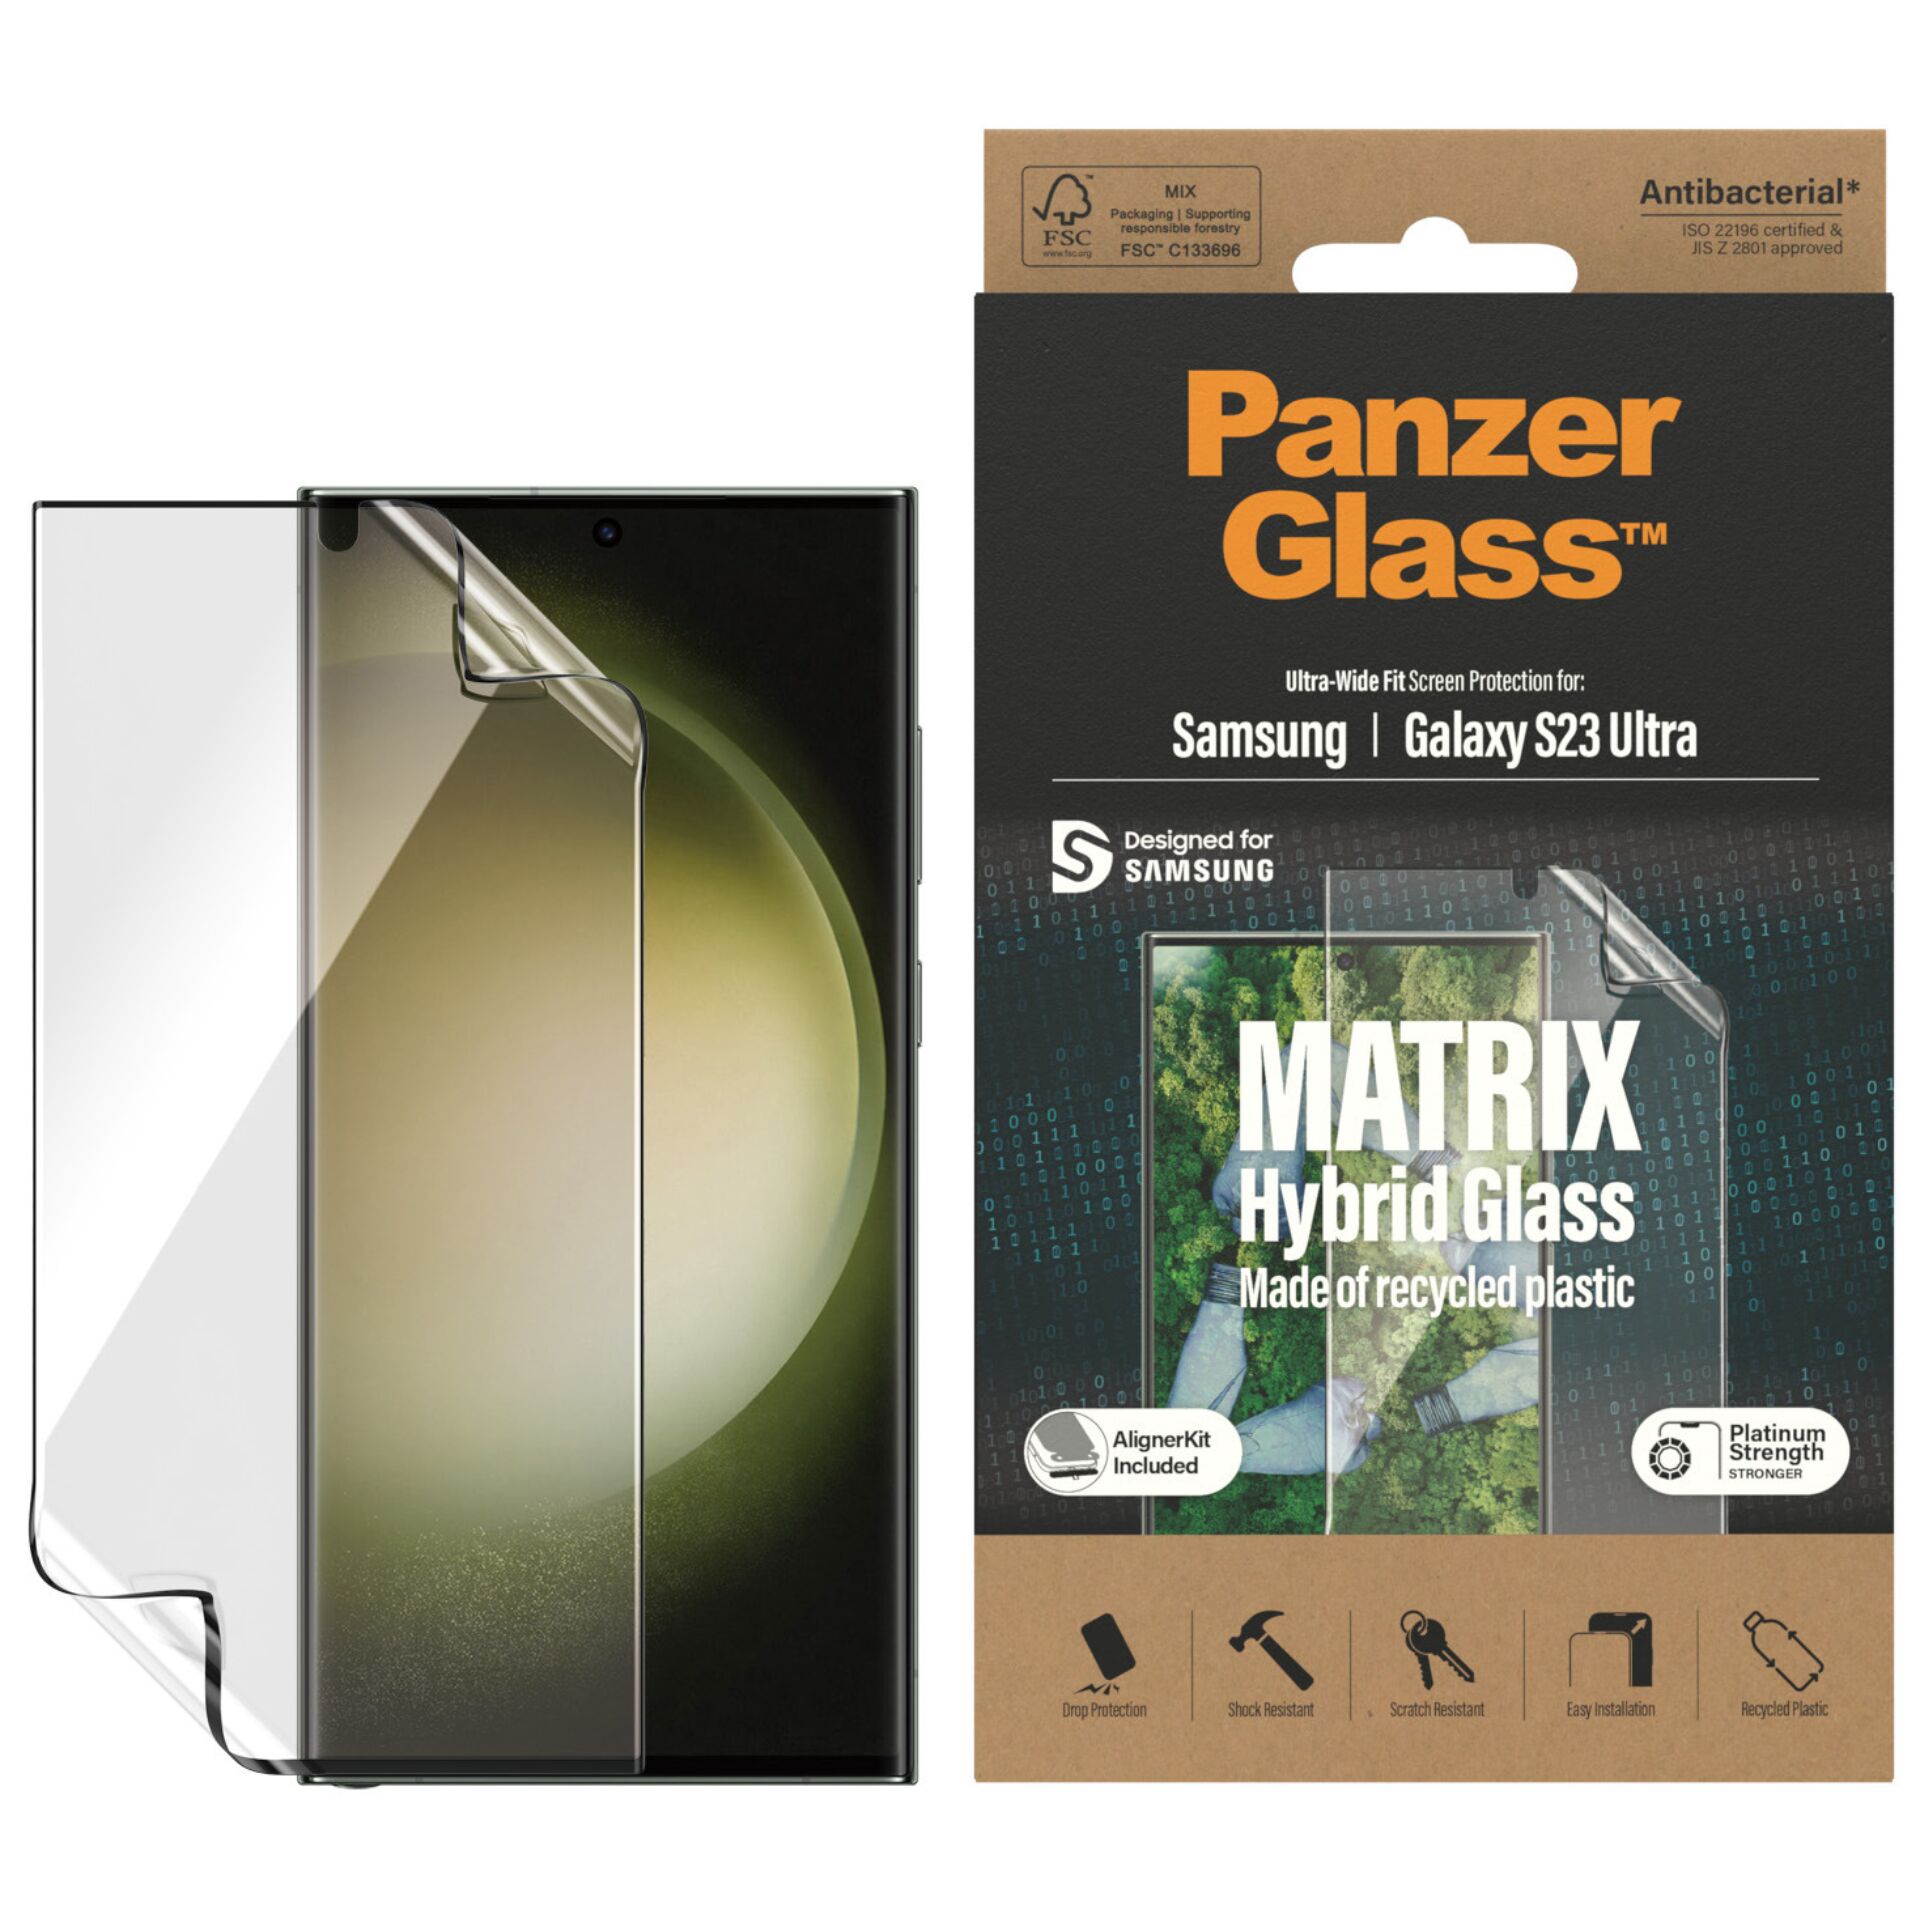 PanzerGlass Matrix Hybrid Glass per Galaxy S23 Ultra